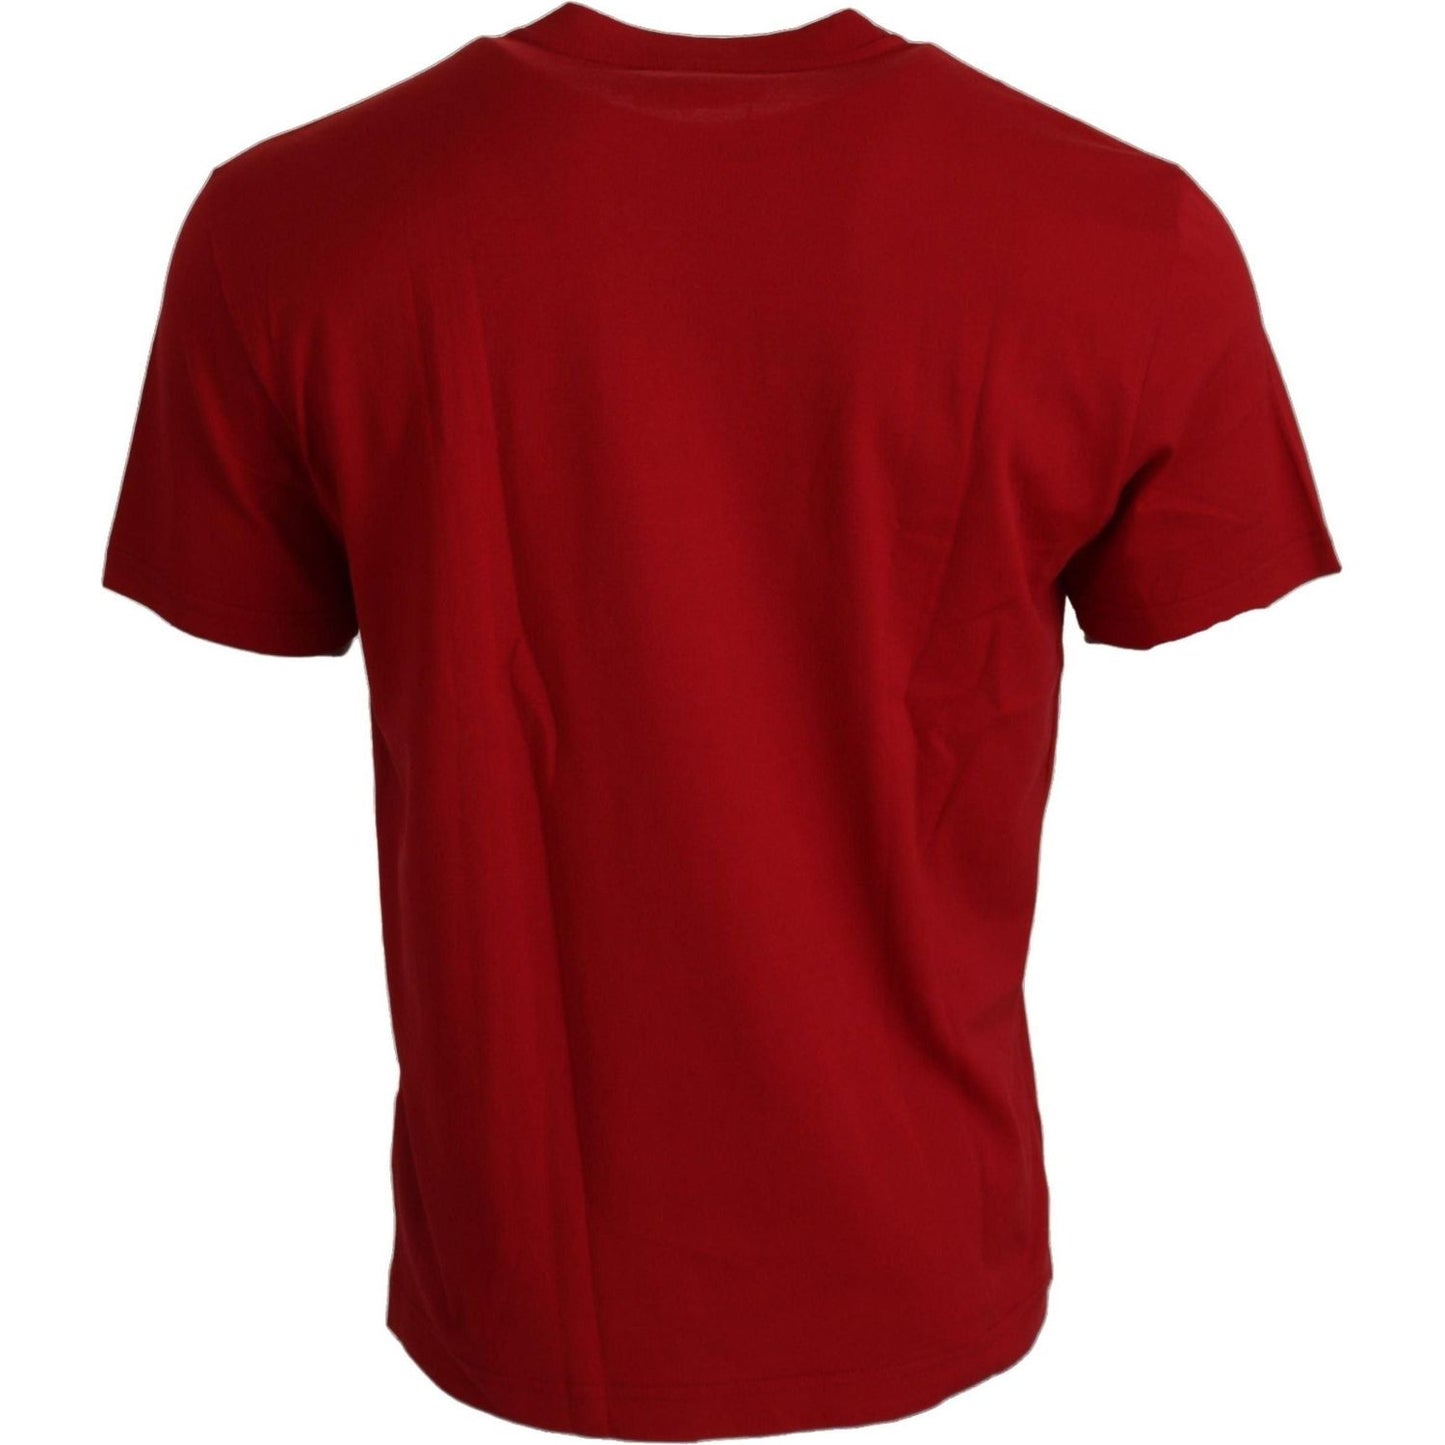 Dolce & Gabbana Exclusive Crewneck Logo T-Shirt in Red red-dg-logo-crewneck-top-exclusive-t-shirt IMG_8108-scaled-2c09969c-3ae.jpg